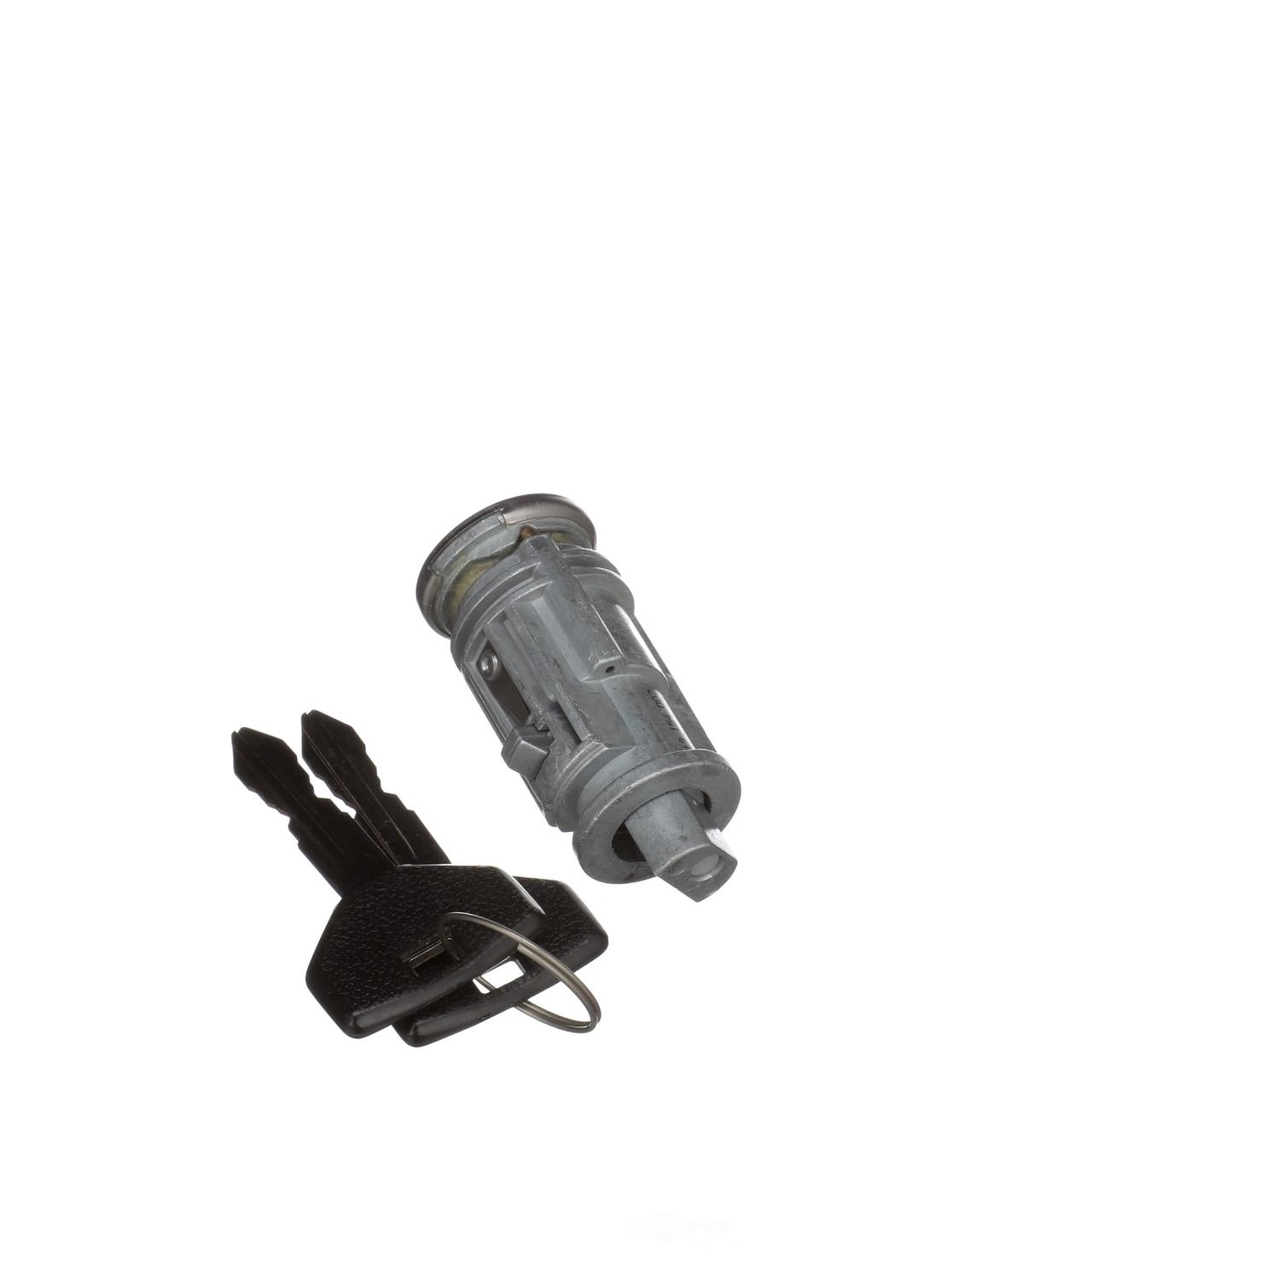 2006 Jeep Wrangler Ignition Lock Cylinder - Standard Motor Products US-427L